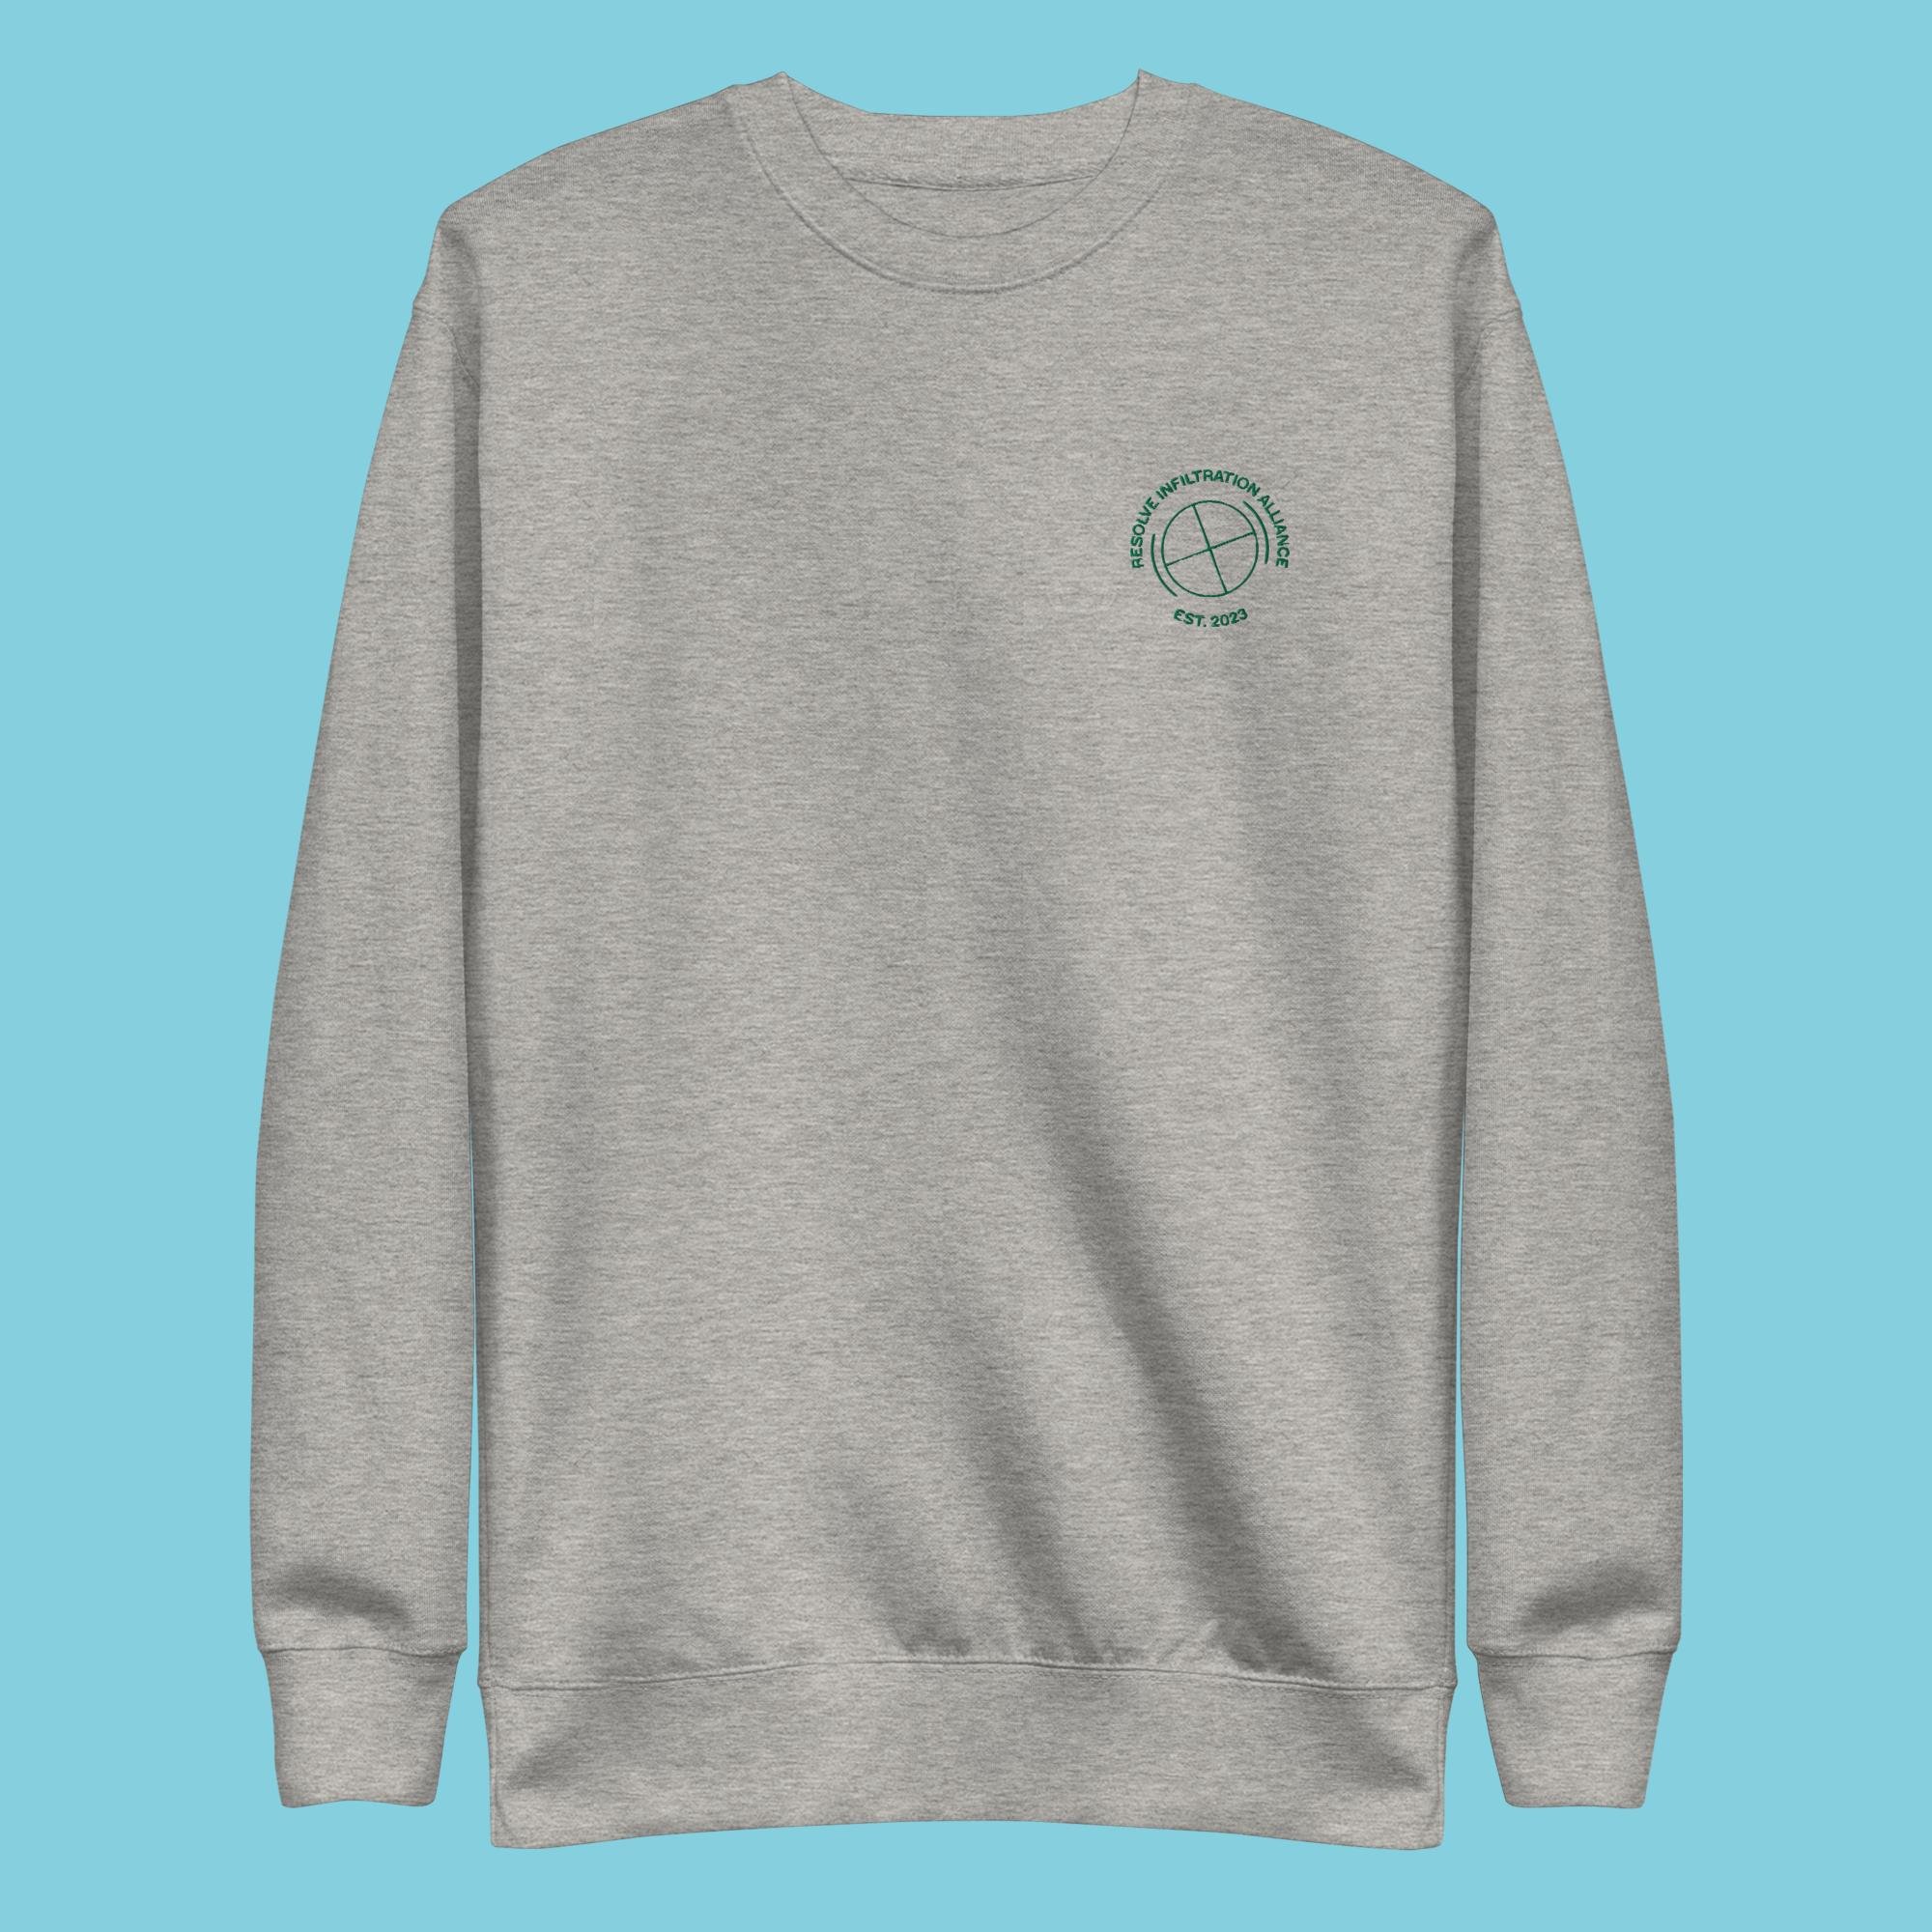 unisex-premium-sweatshirt-carbon-grey-front-64edc5526f3ed.jpg